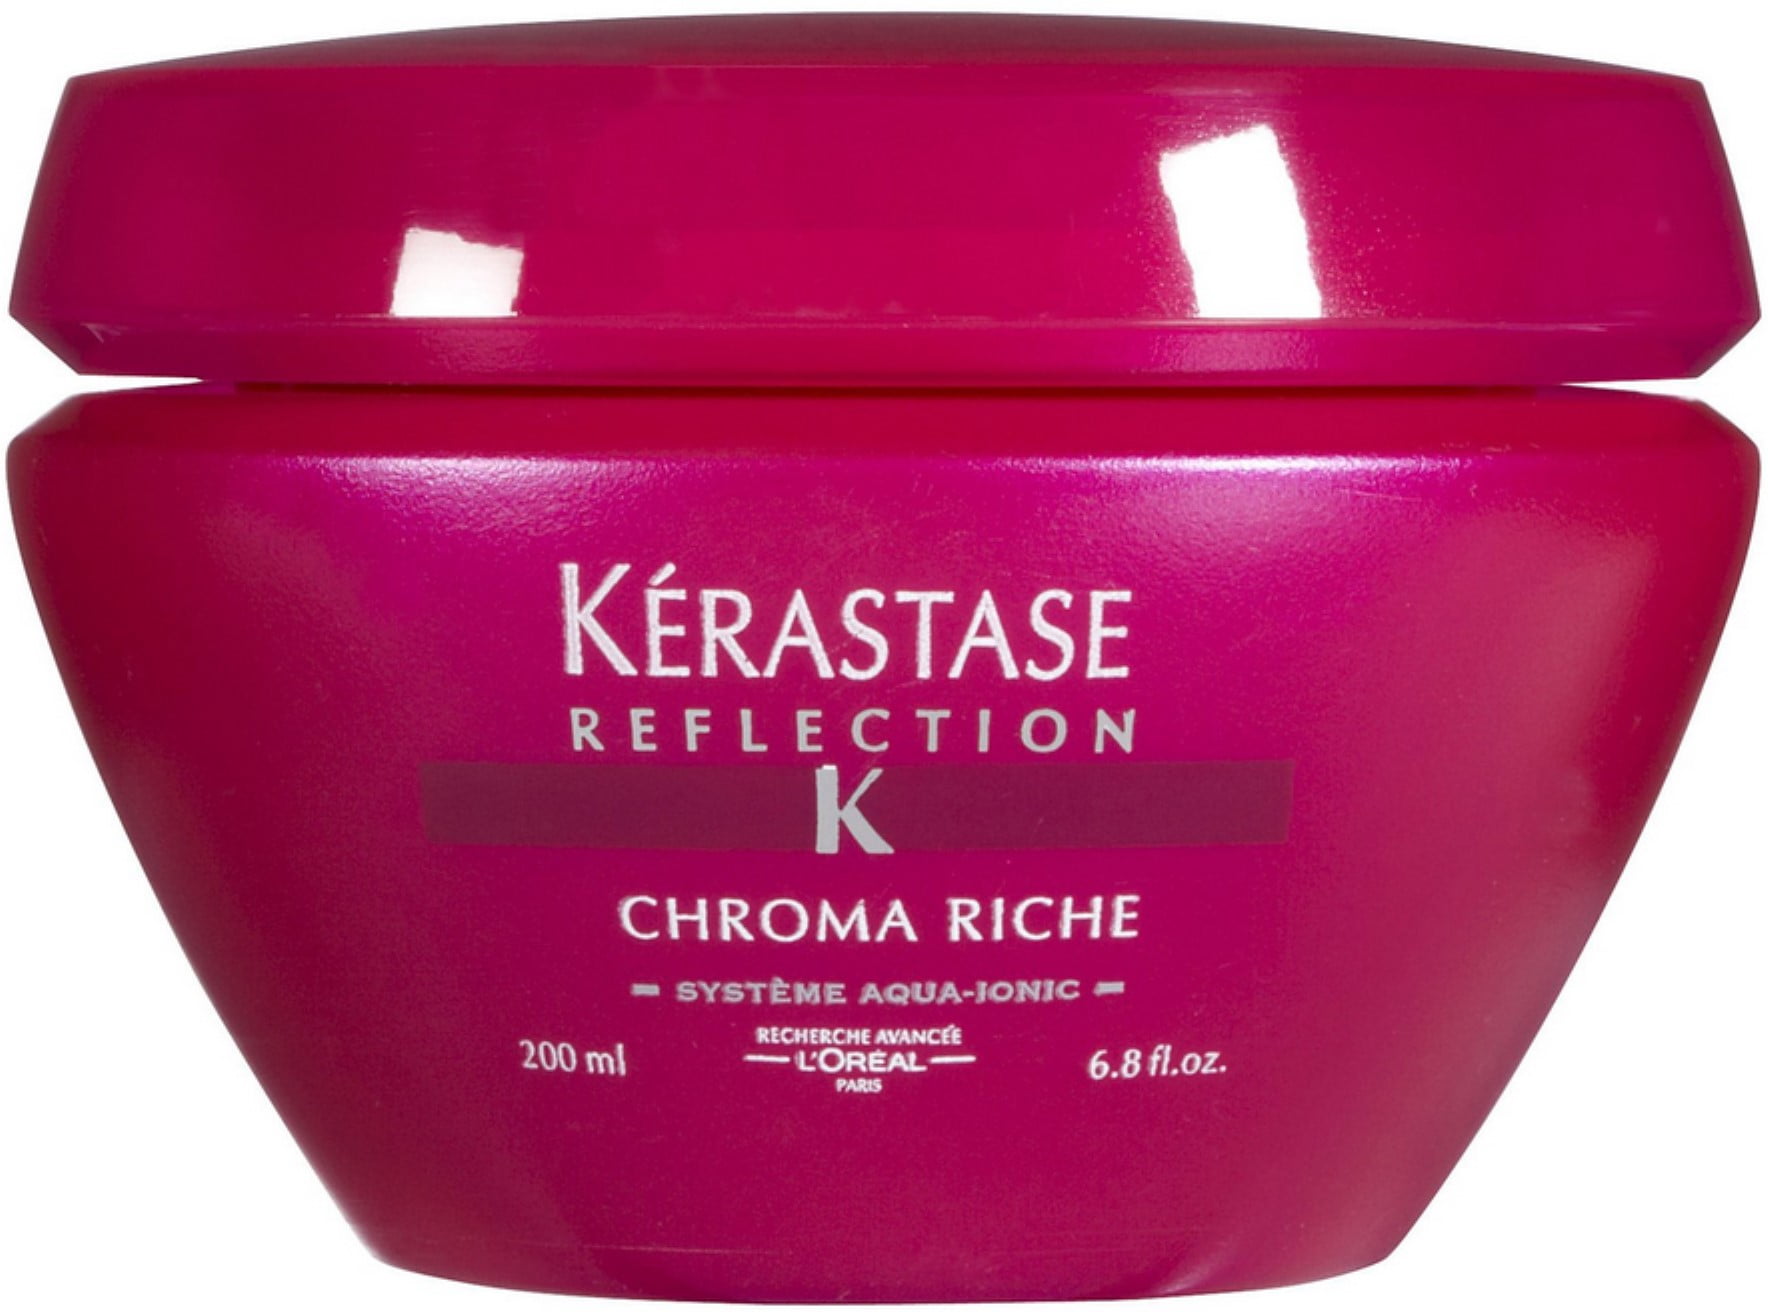 Kerastase Reflection Chroma Riche Masque oz of 3) - Walmart.com